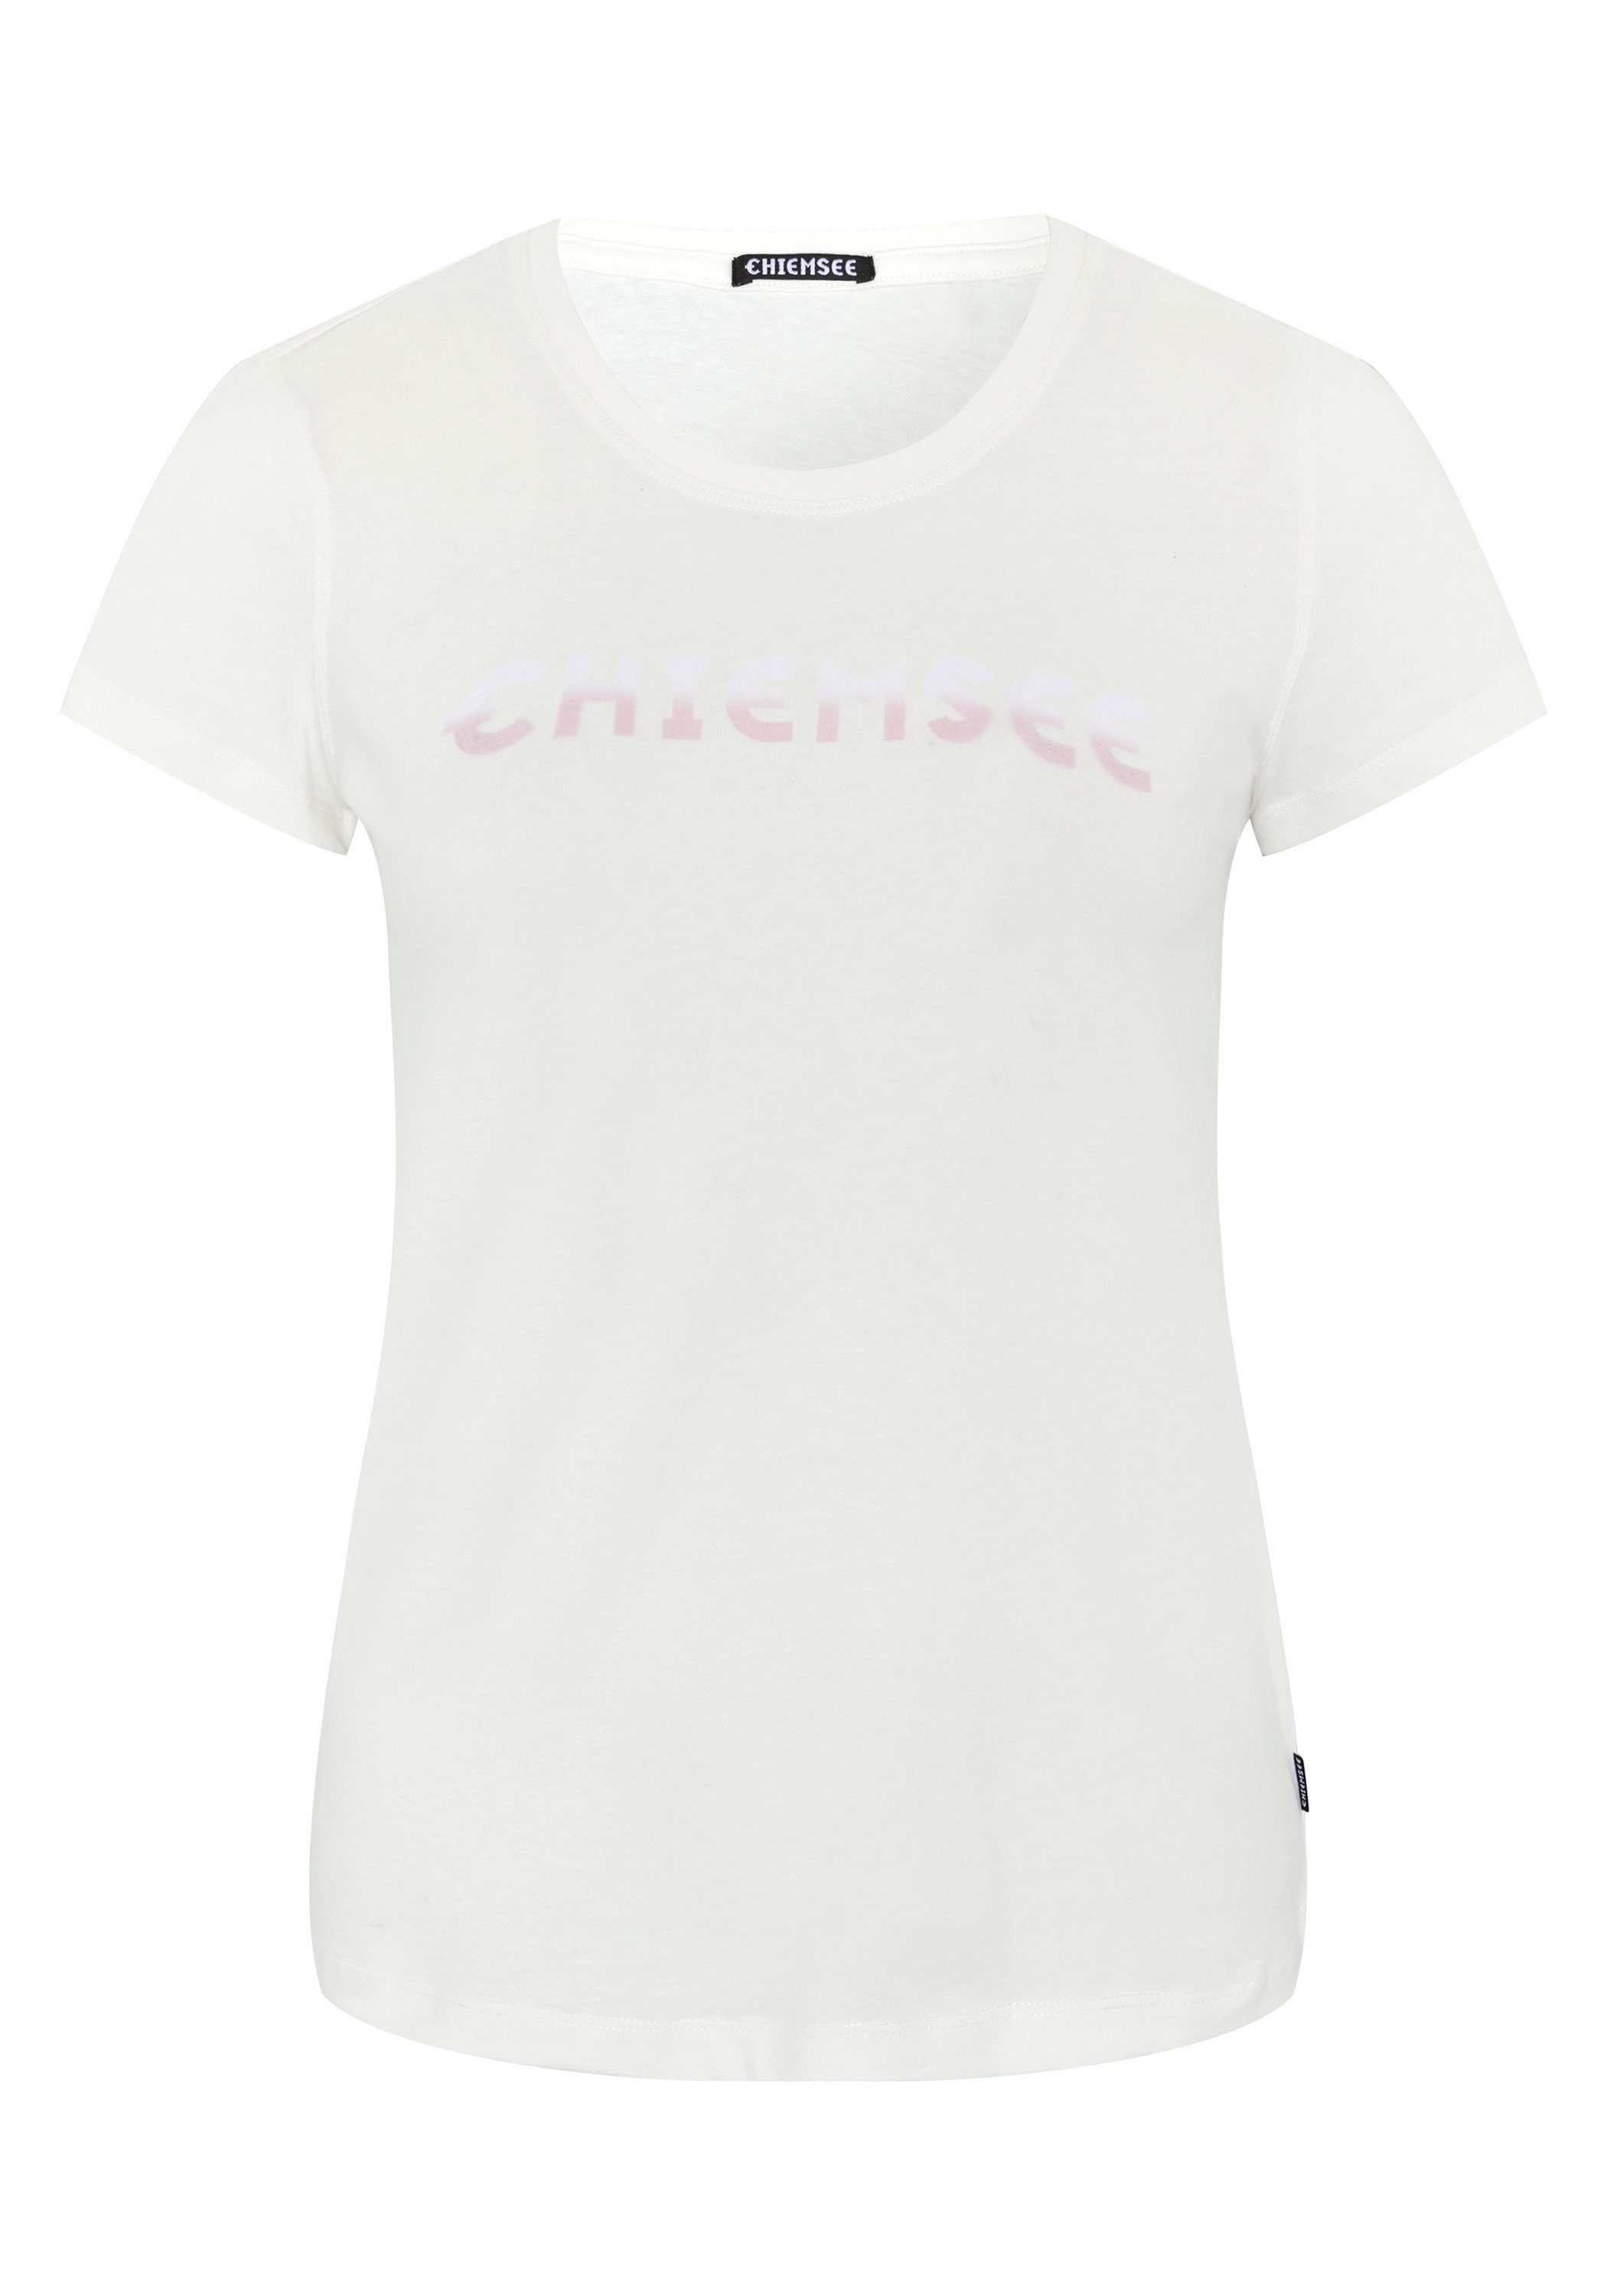 Star T-Shirt White mit Print-Shirt 1 in Farbverlauf-Optik Chiemsee Logo